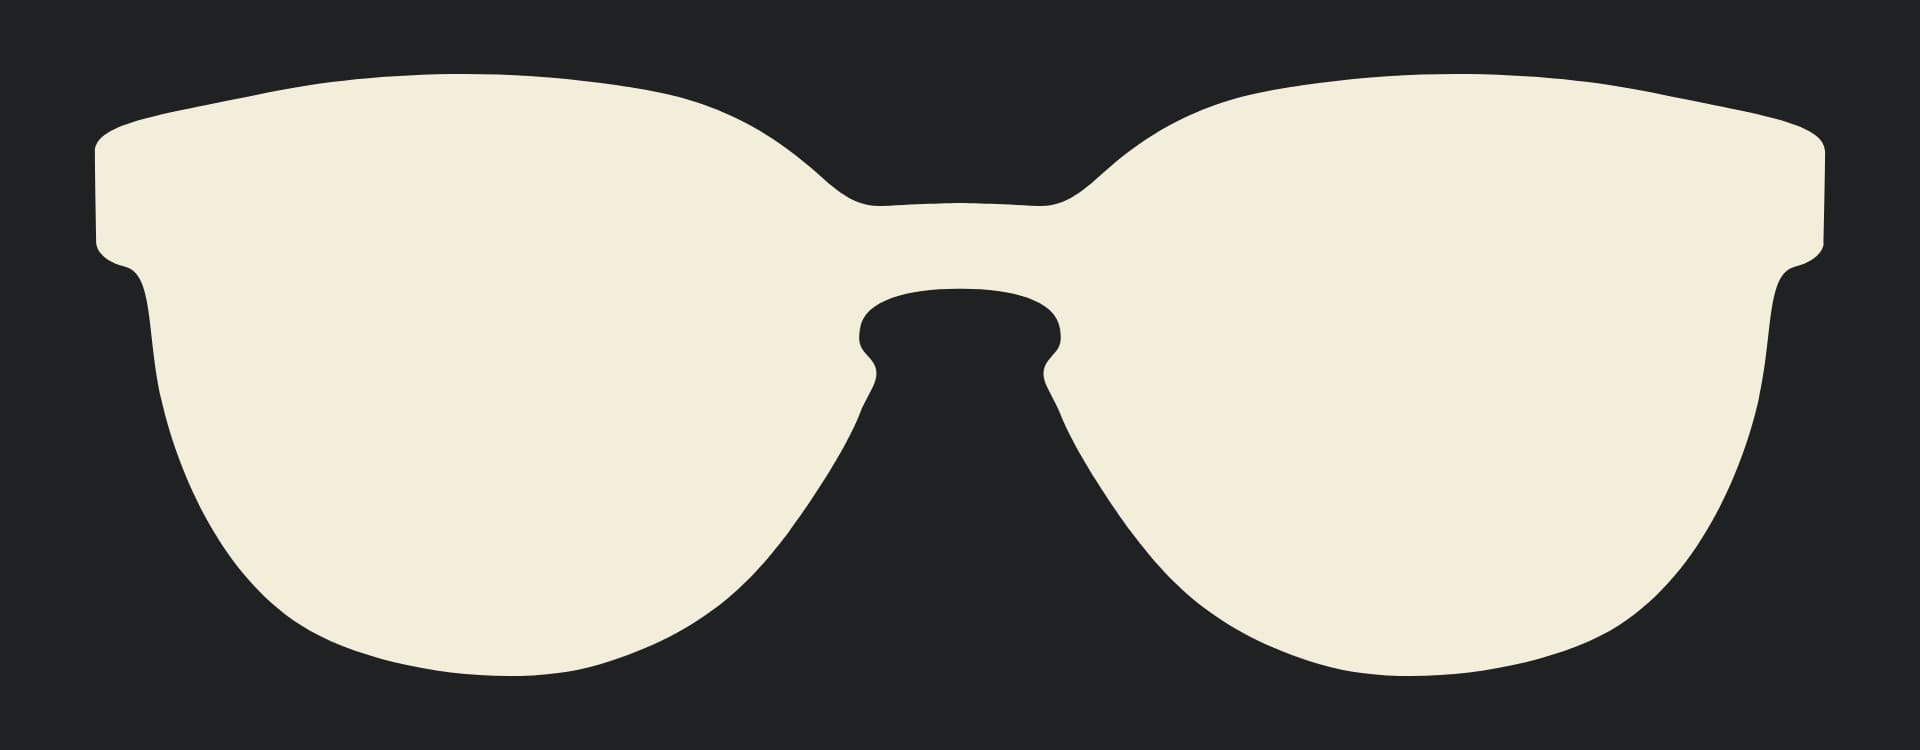 Logo lunette beige sur fond noir